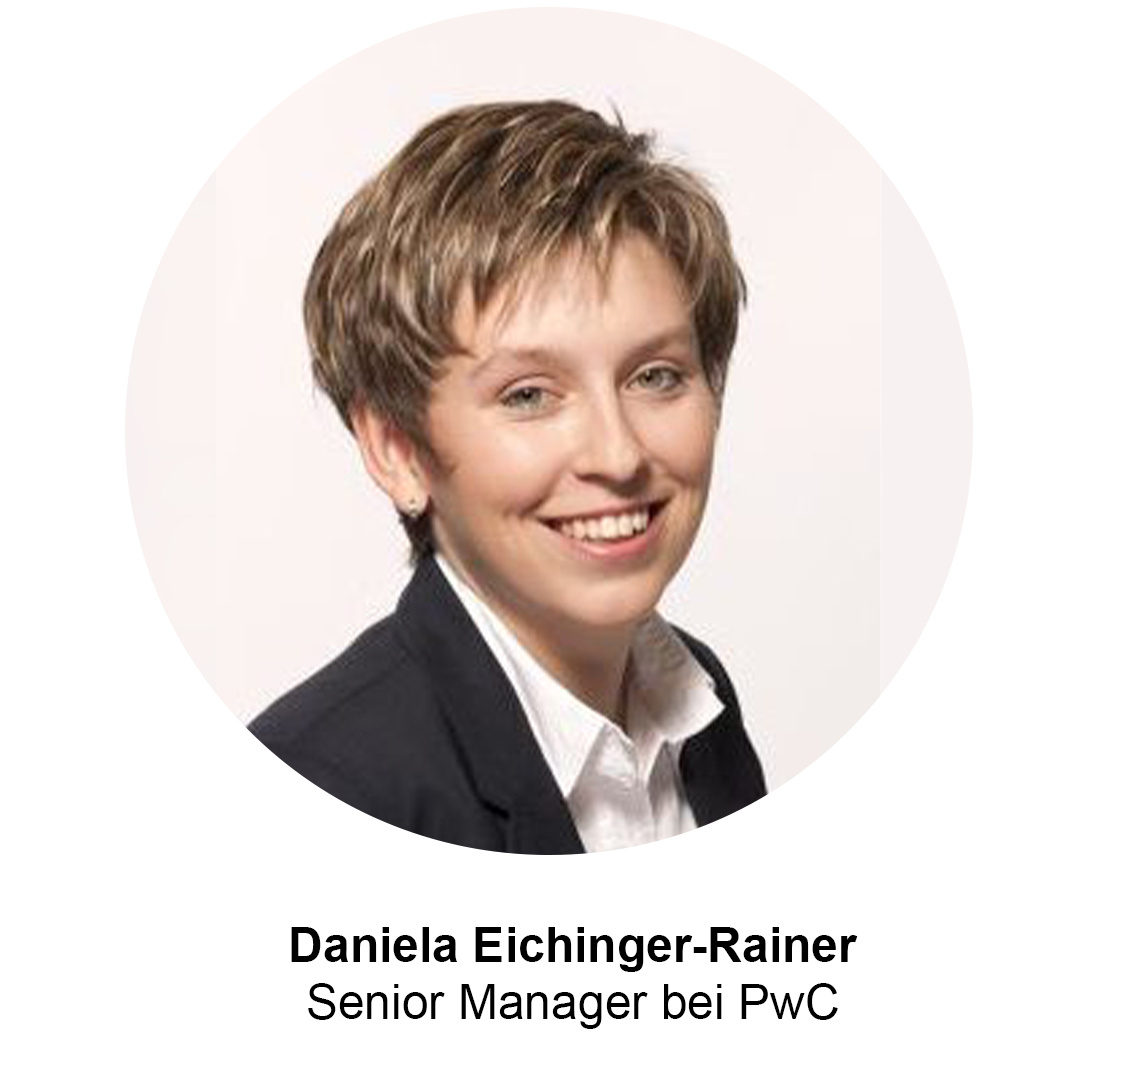 Daniela Eichinger-Rainer